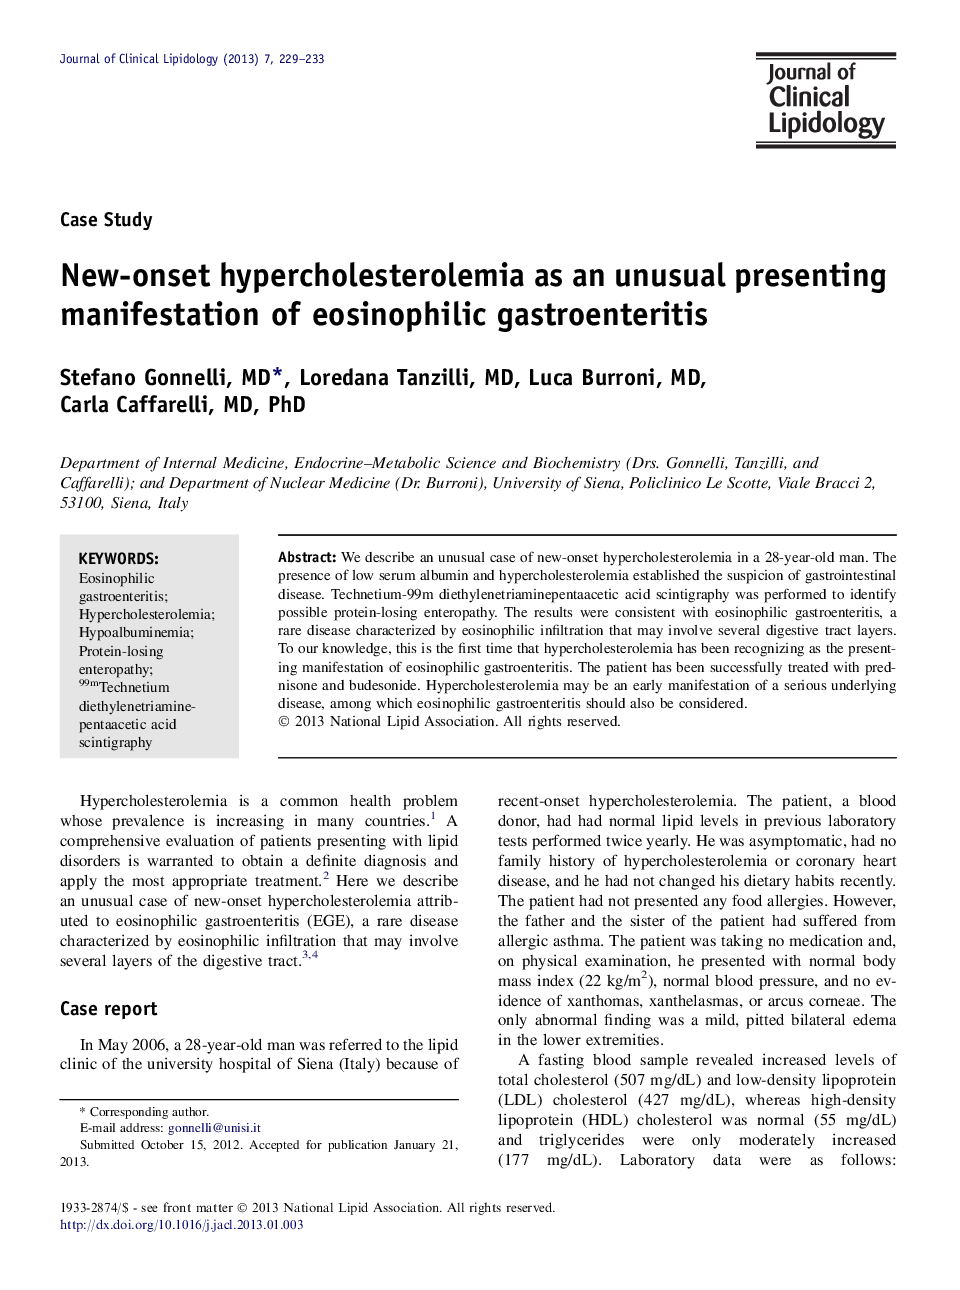 New-onset hypercholesterolemia as an unusual presenting manifestation of eosinophilic gastroenteritis